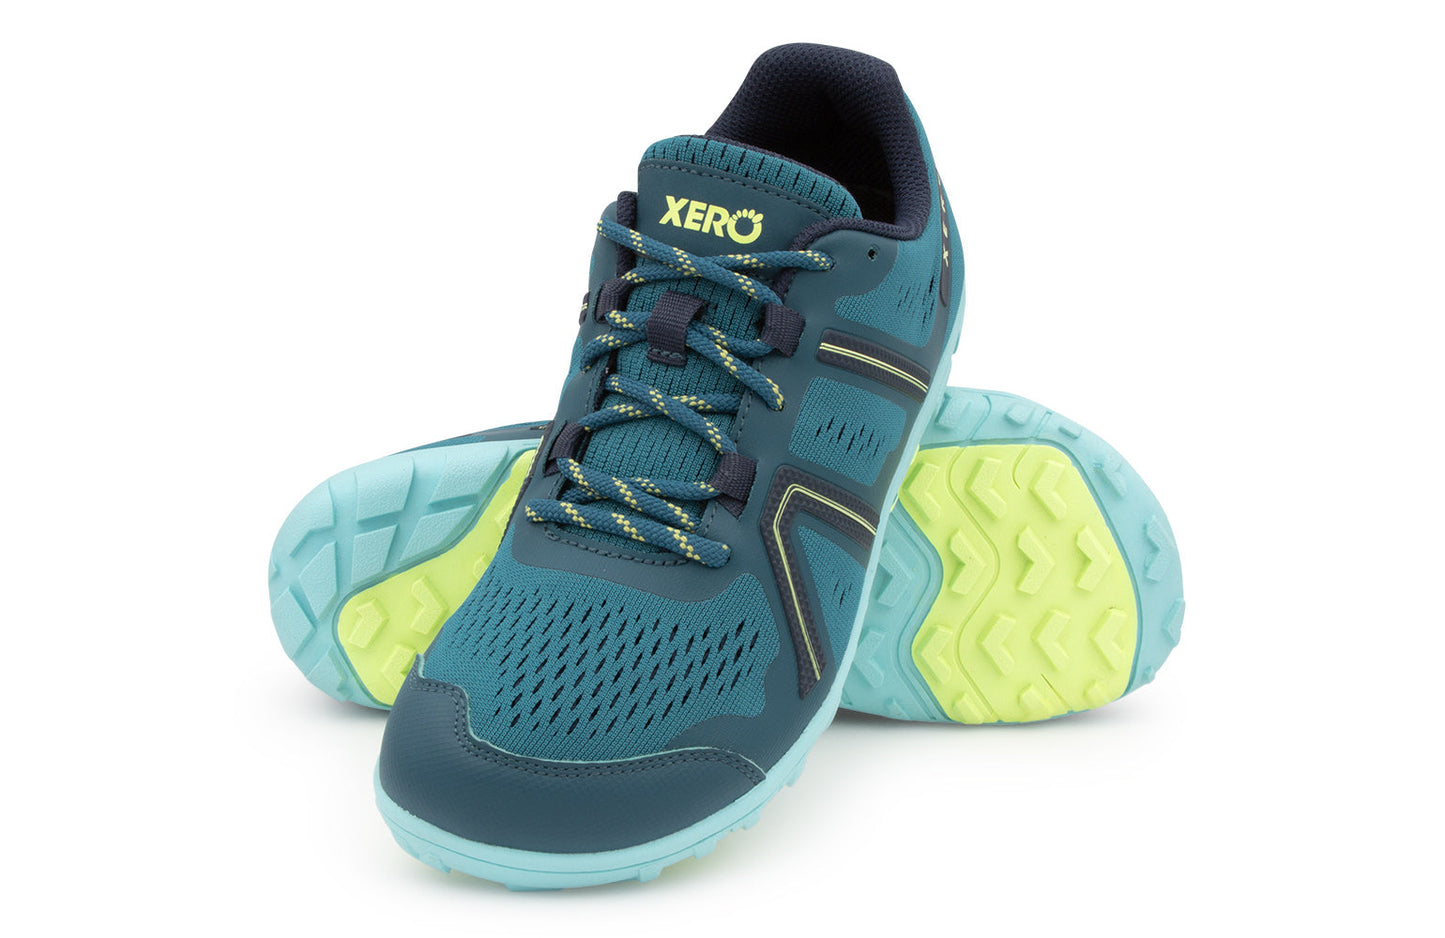 Xero Shoes Mesa Trail barfods trailsko til kvinder i farven lagoon, par